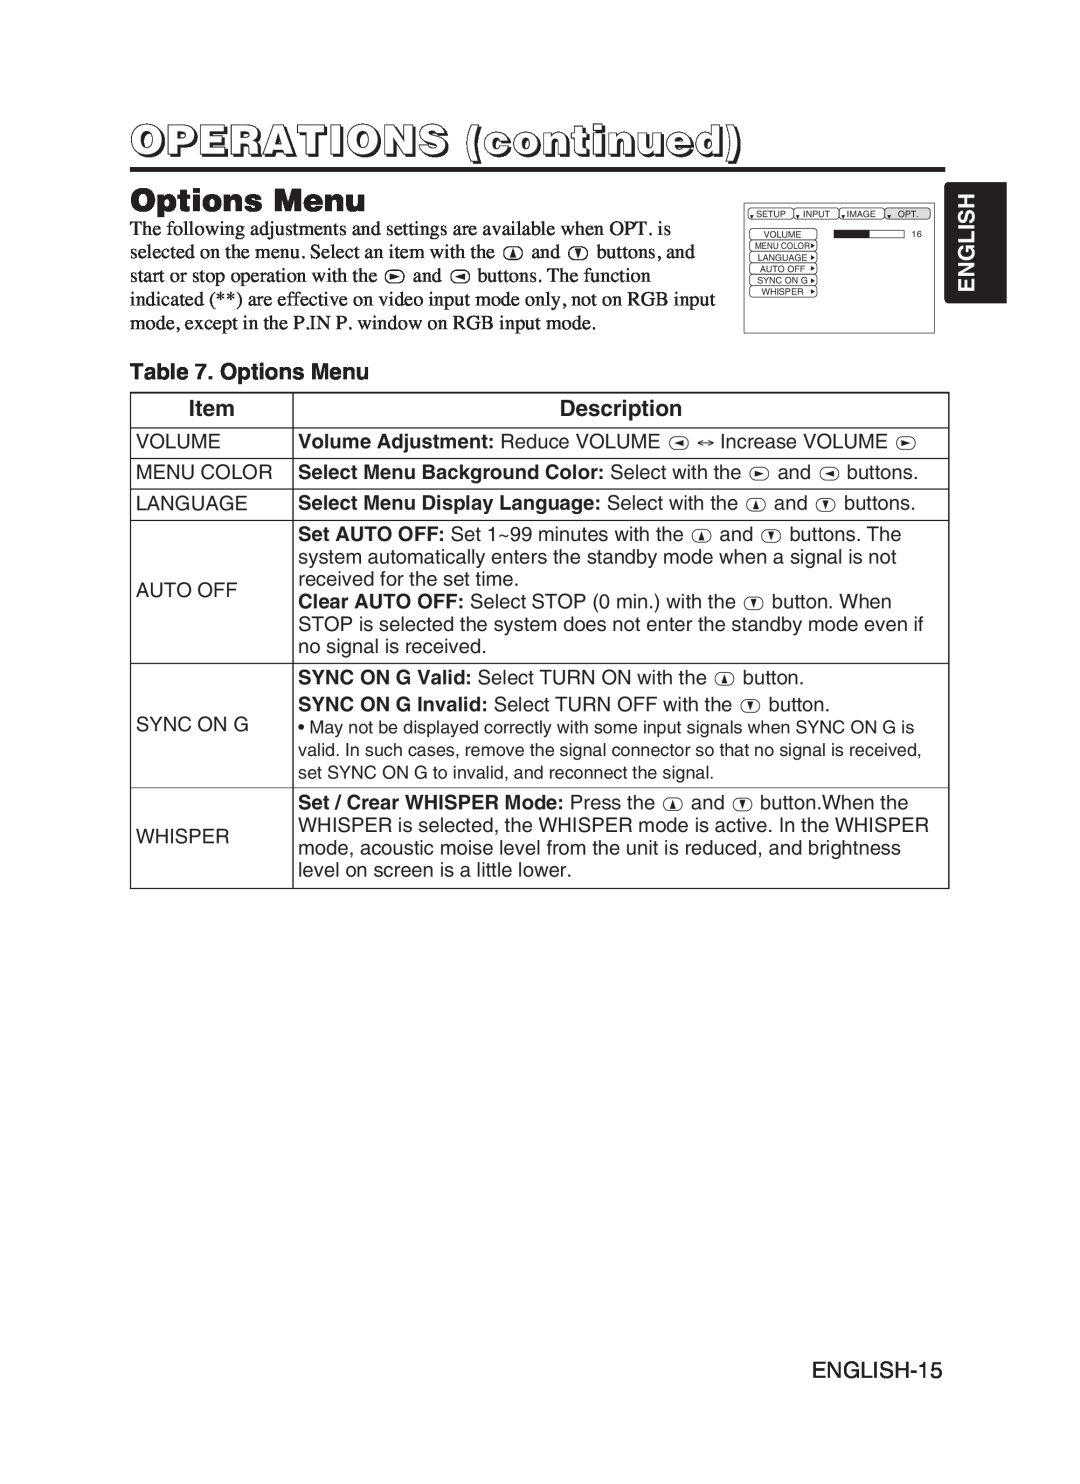 Hitachi CP-SX5600W user manual Options Menu, OPERATIONS continued, English, Description 